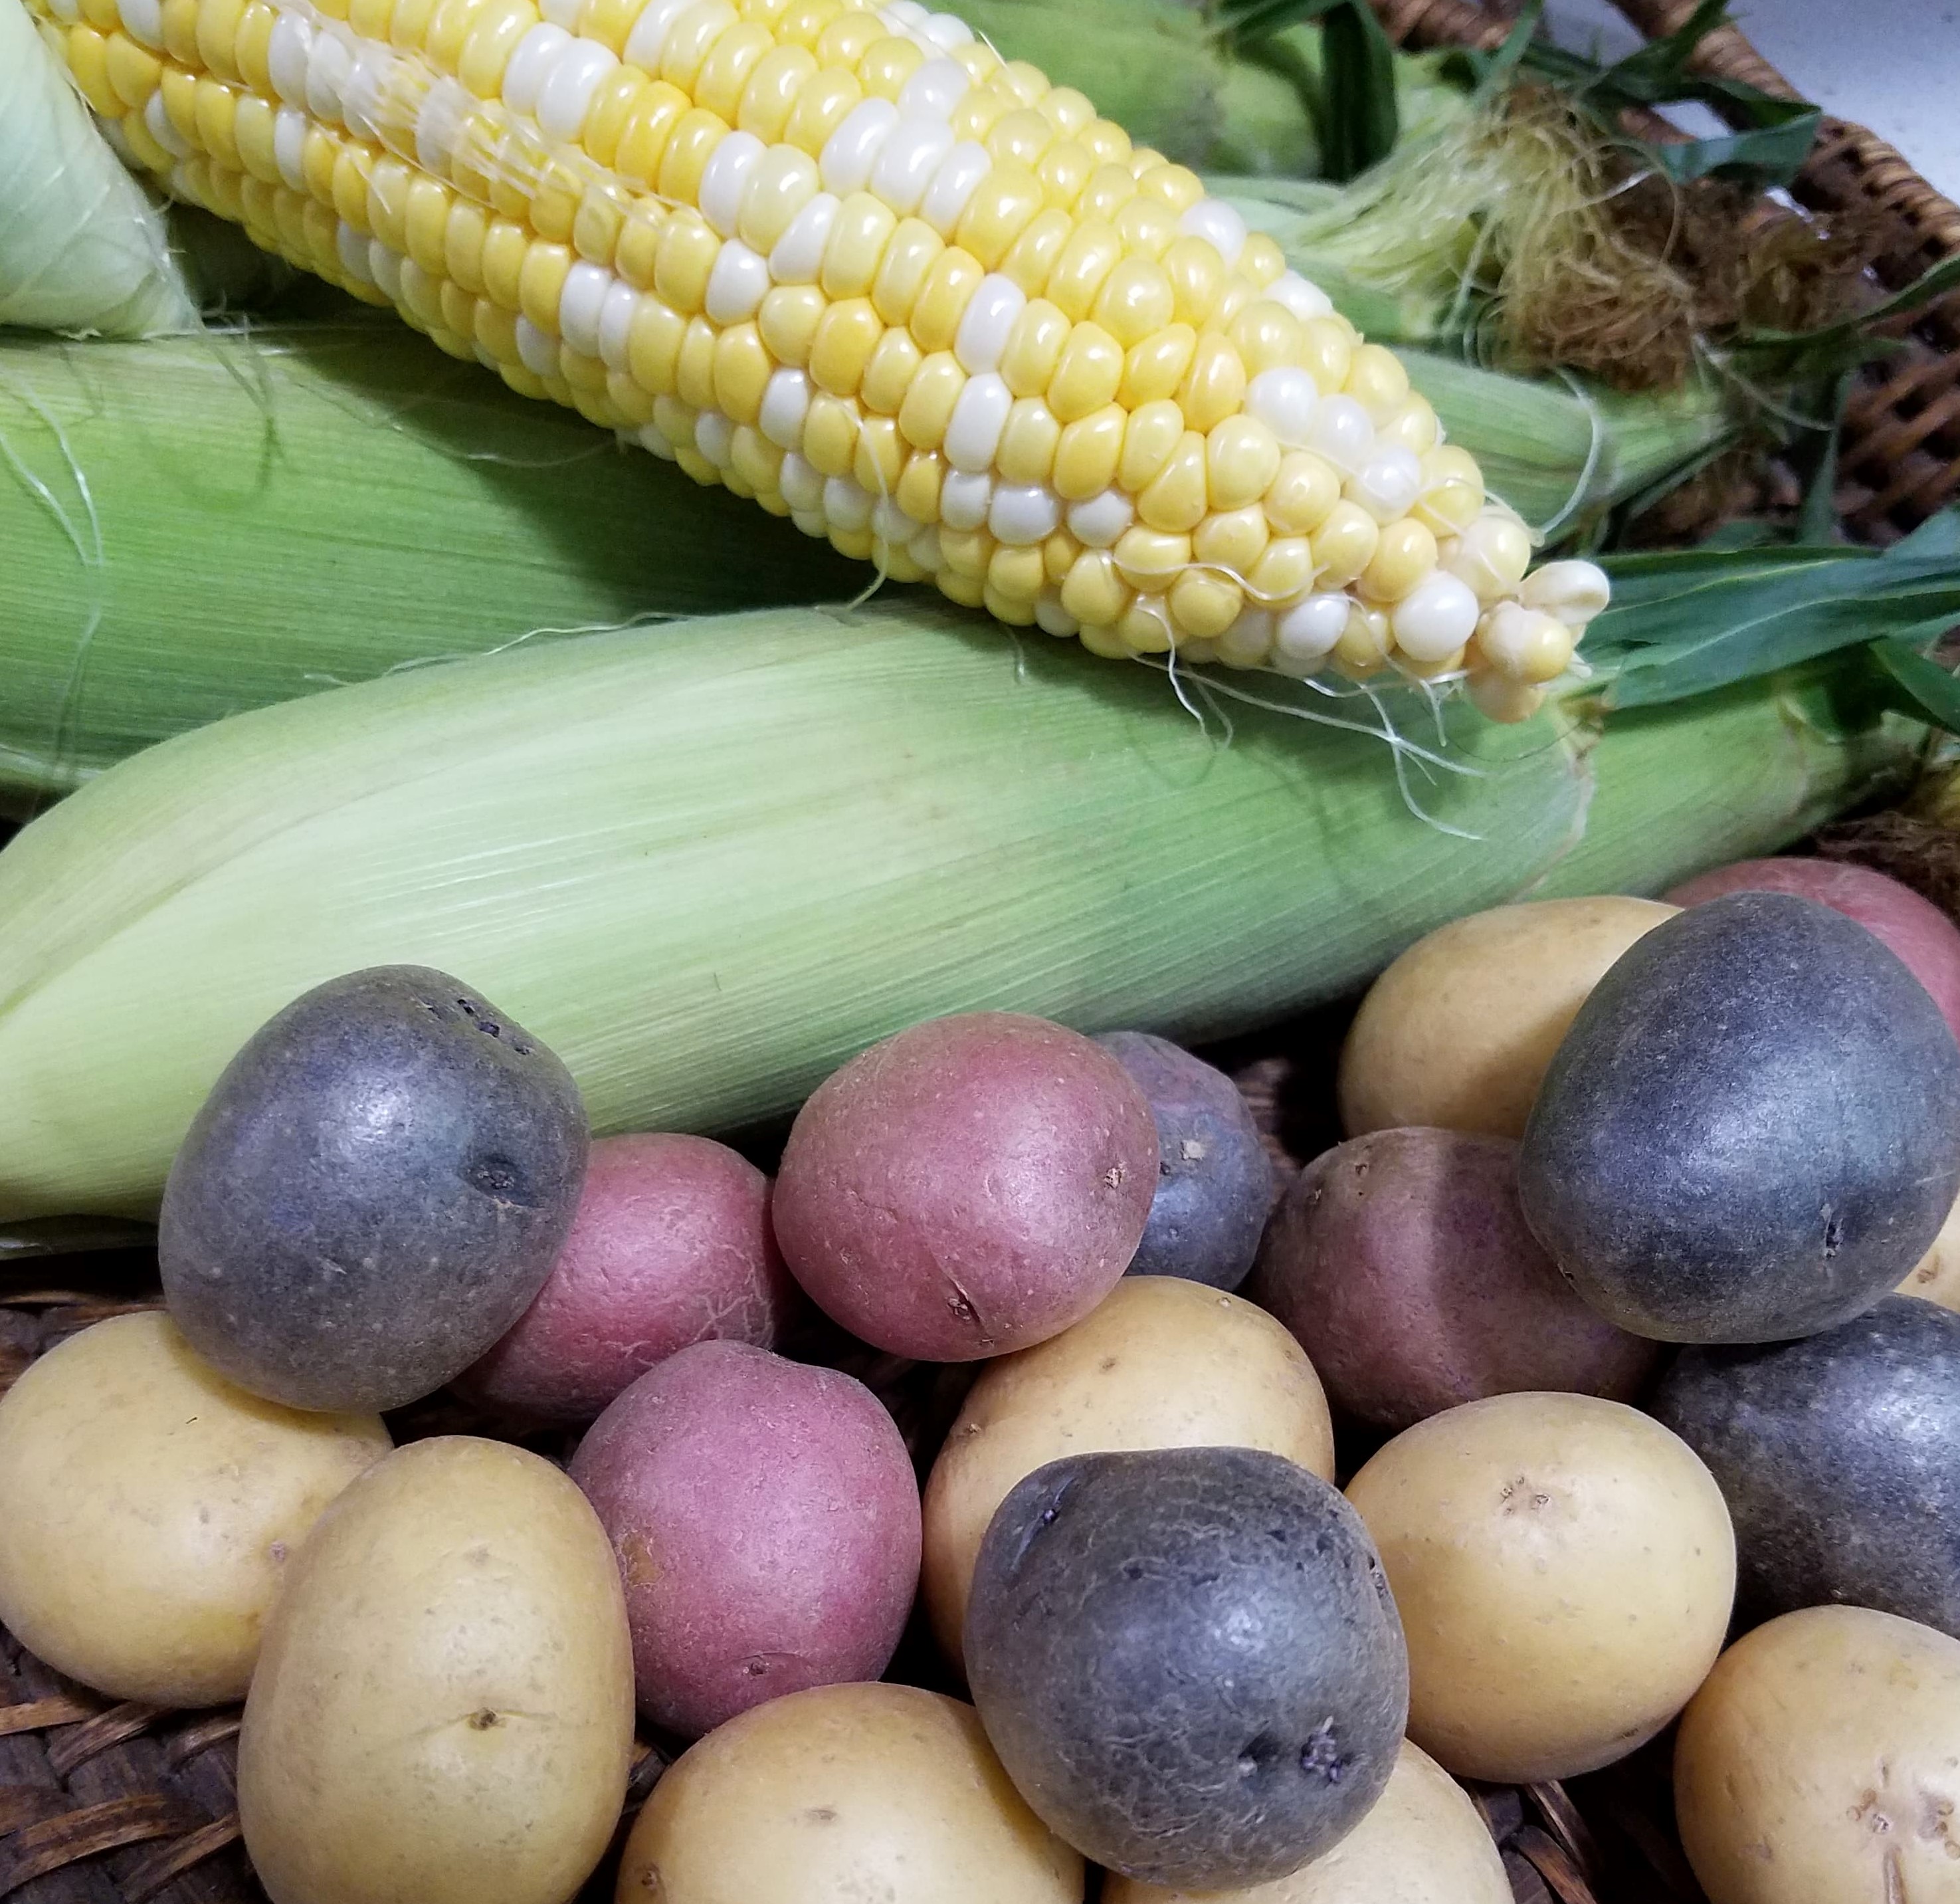 corn, potatoes